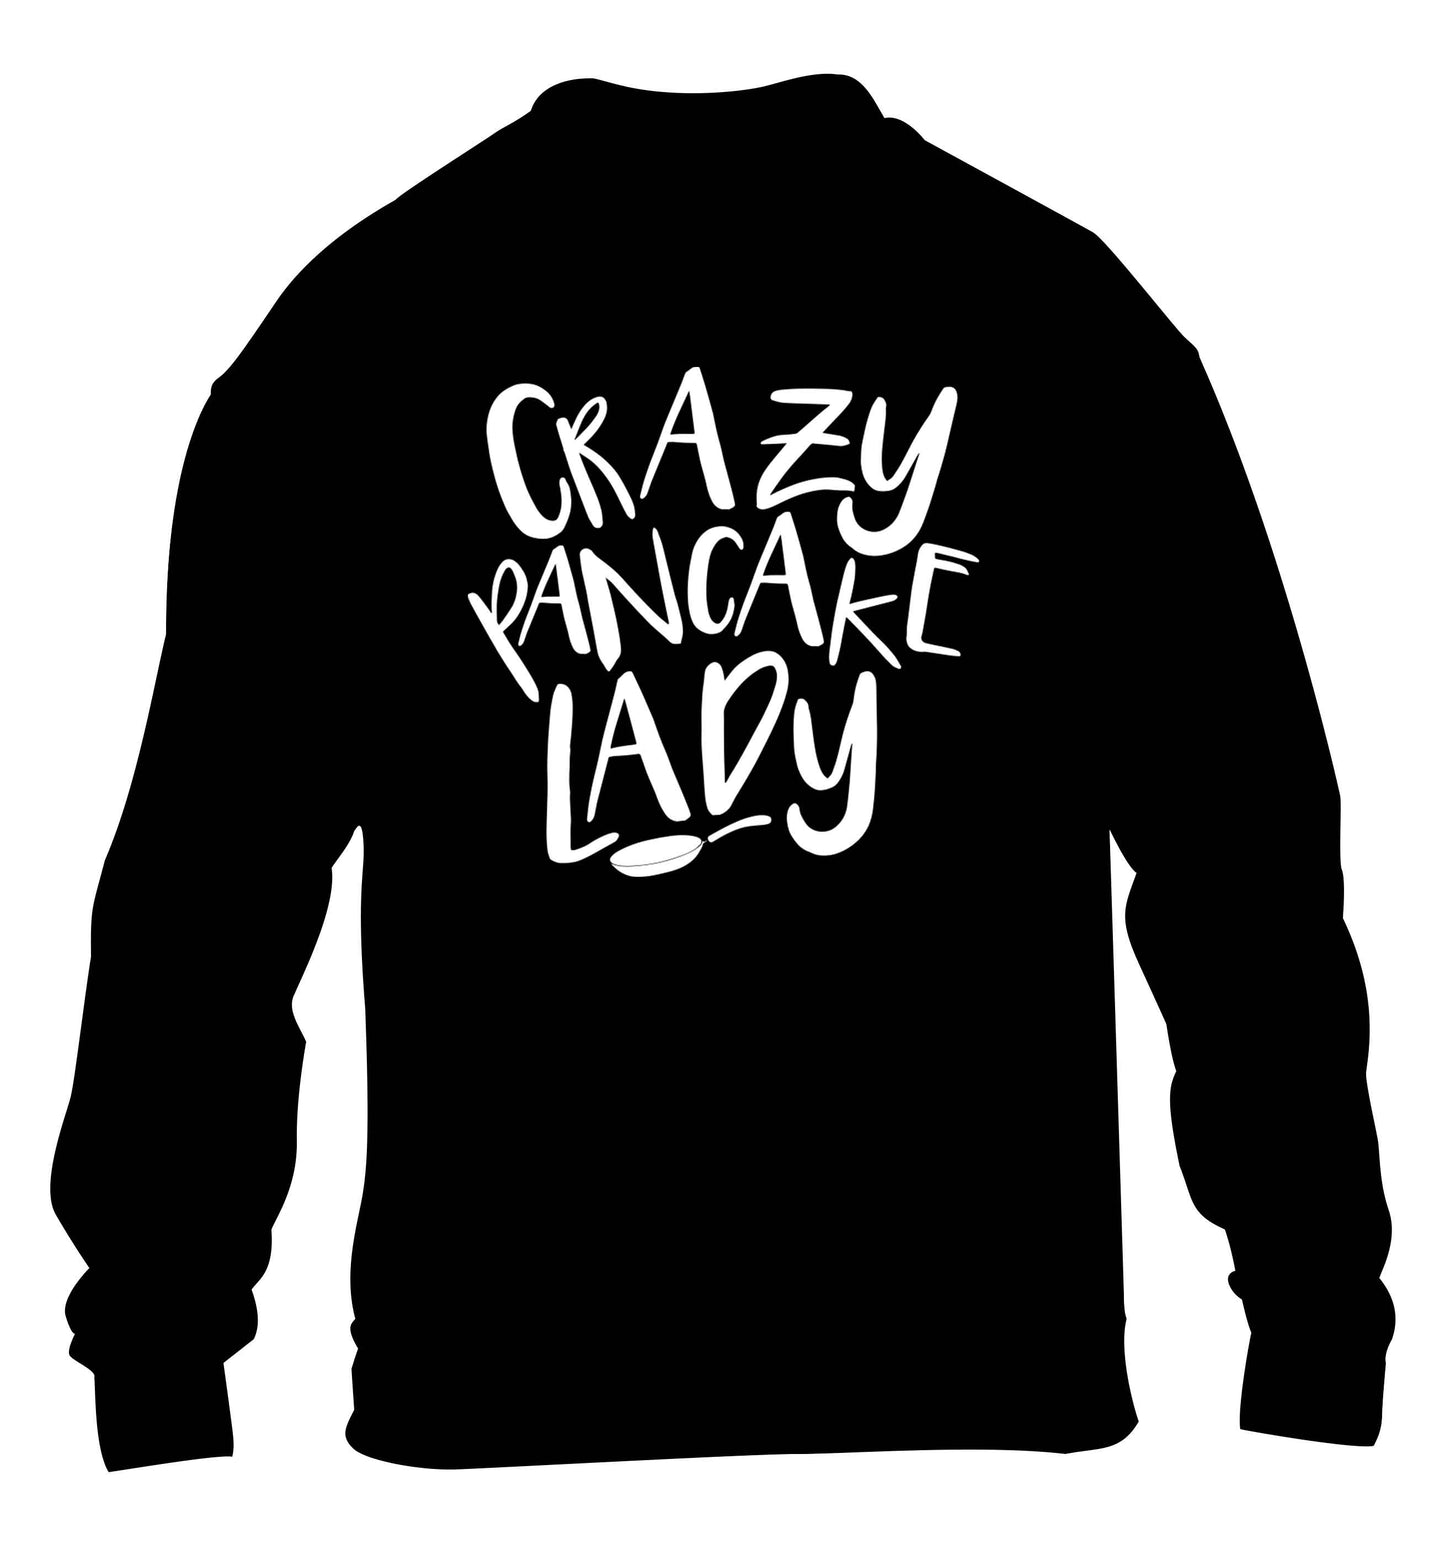 Crazy pancake lady children's black sweater 12-13 Years